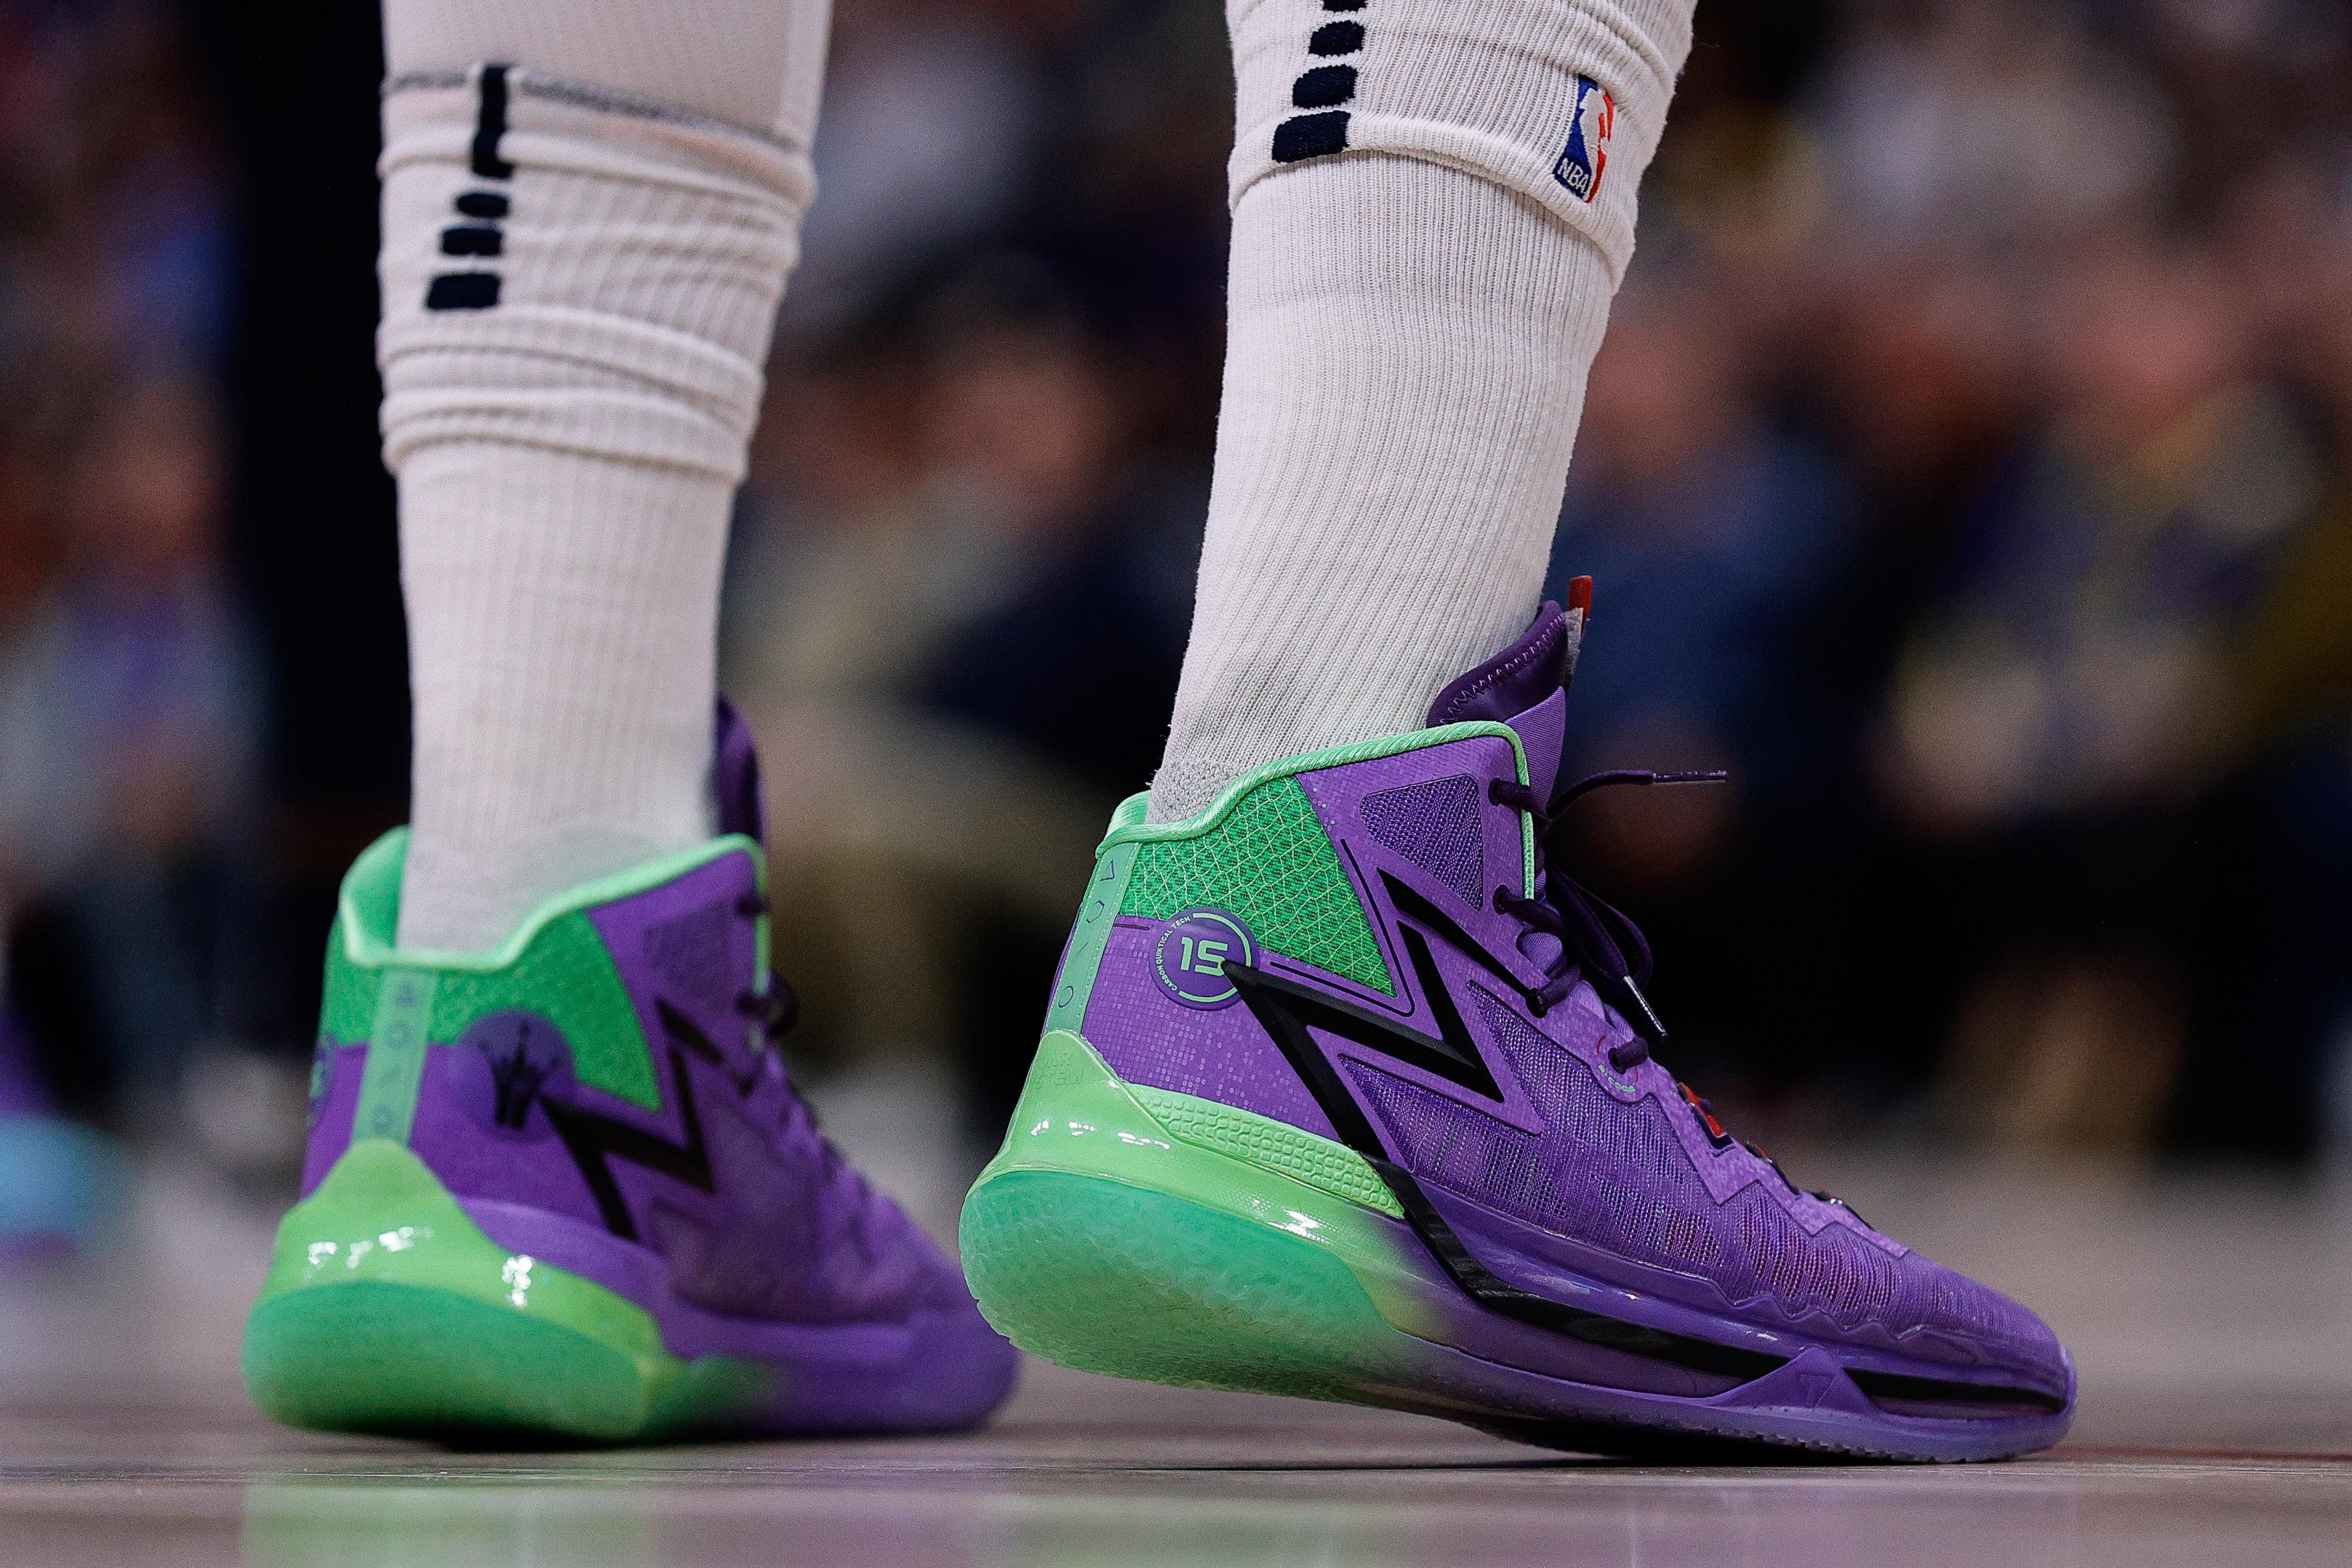 Denver Nuggets center Nikola Jokic's purple and green sneakers.